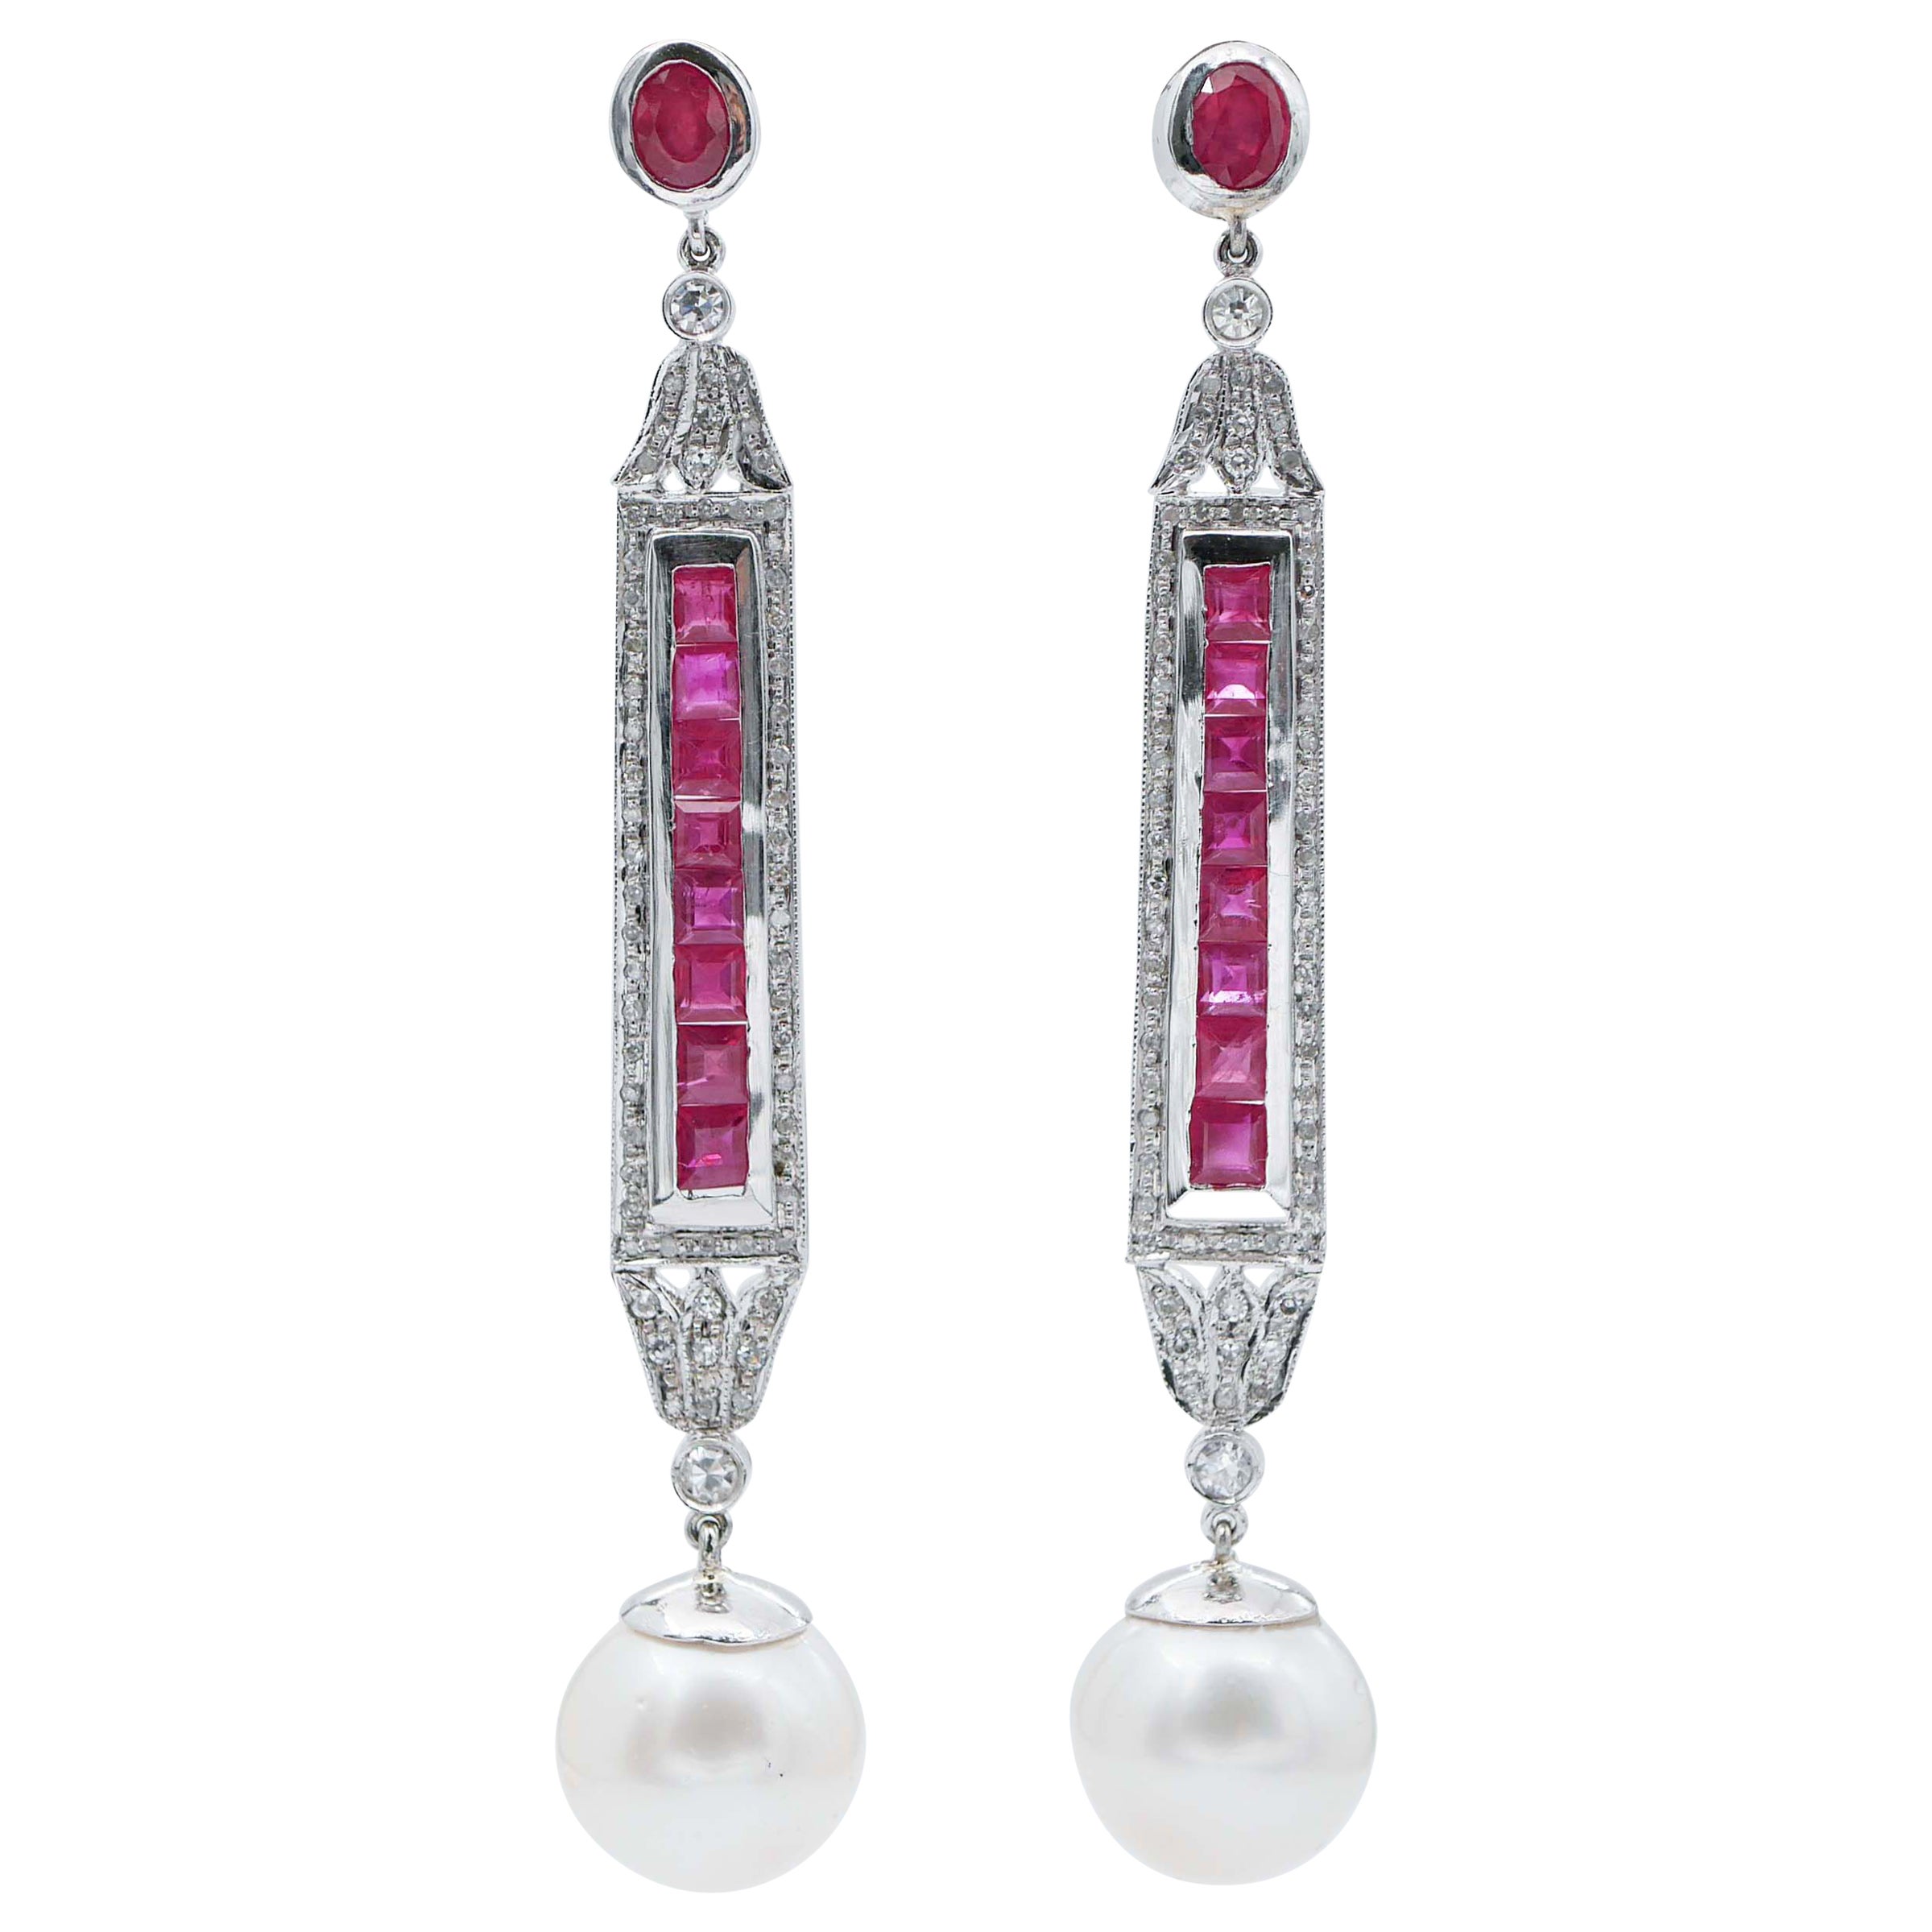 South-Sea Pearls, Rubies, Diamonds, Platinum Earrings For Sale